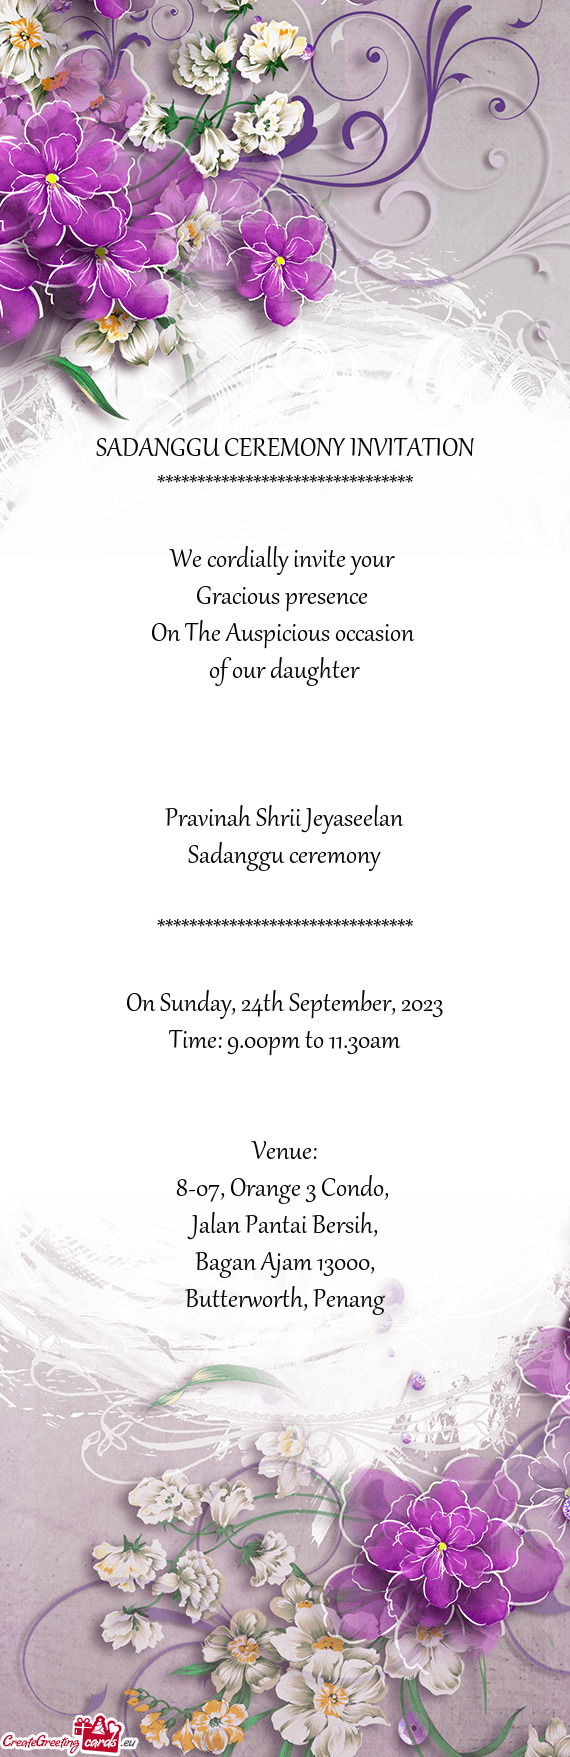 SADANGGU CEREMONY INVITATION